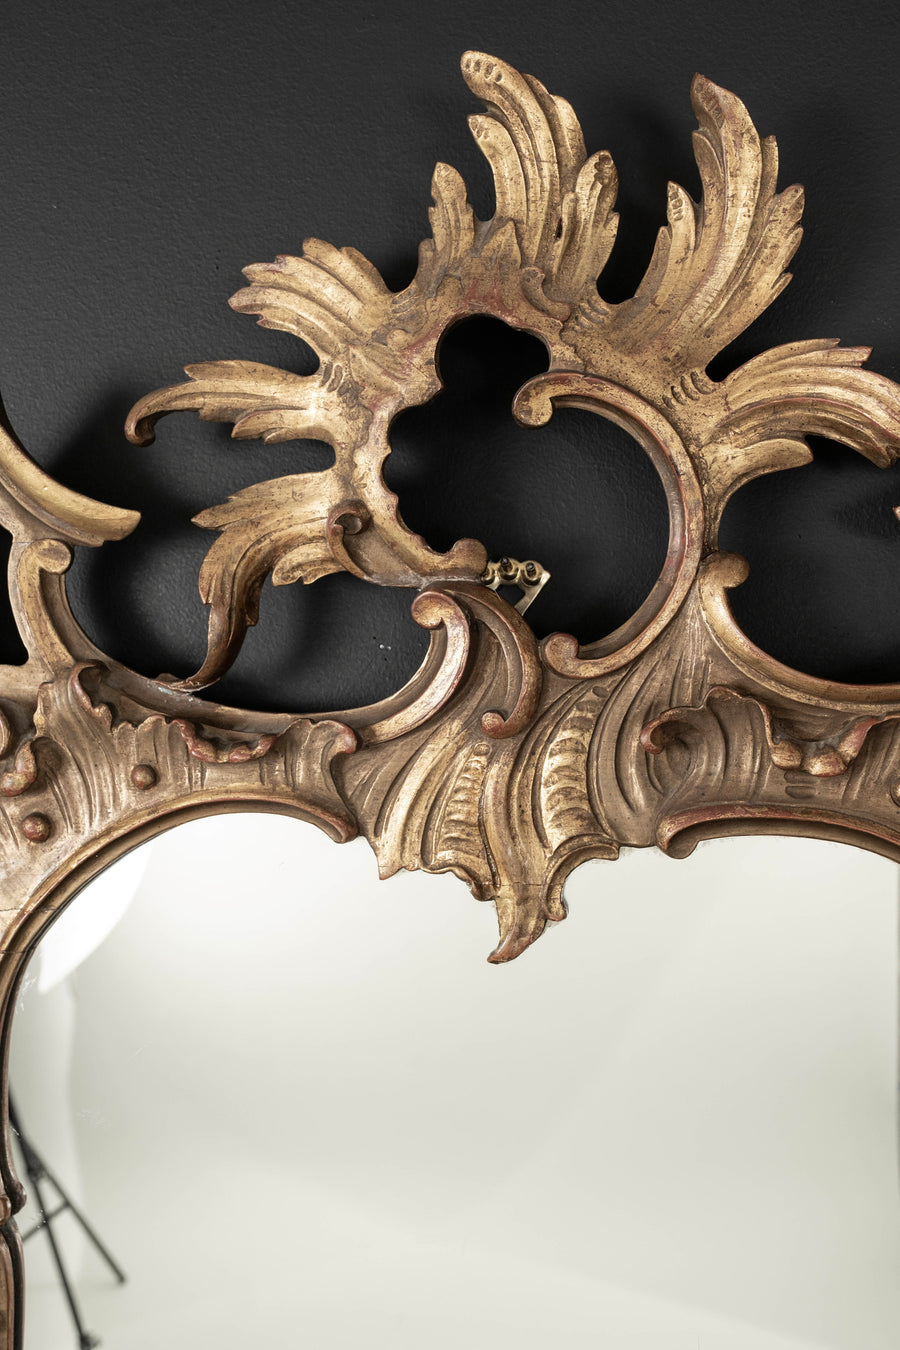 Pair George III Style Giltwood Mirrors